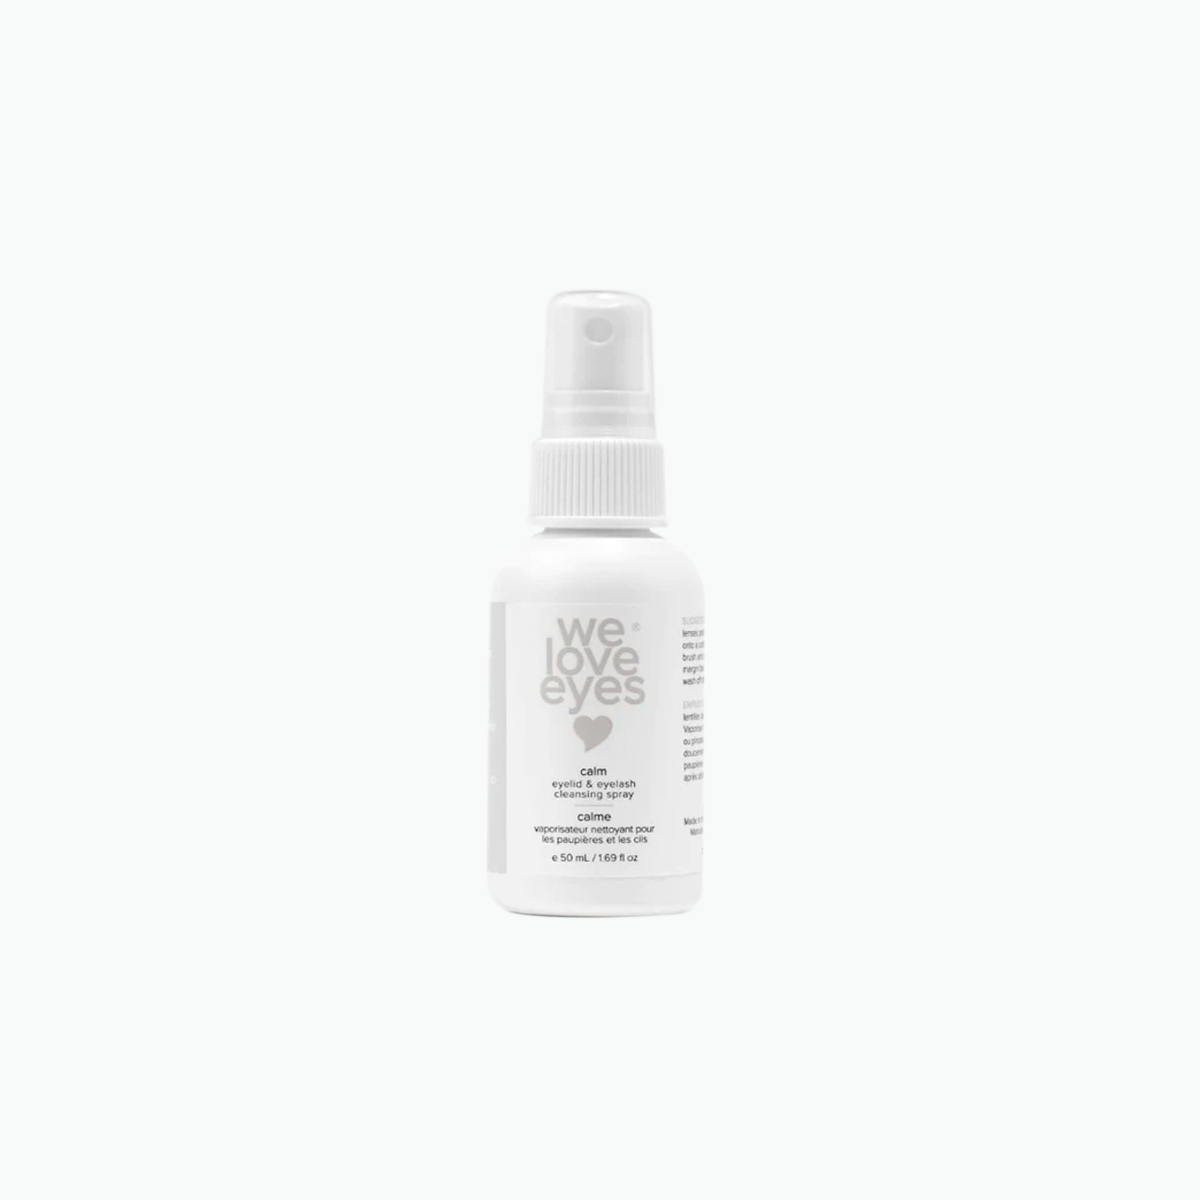 We Love Eyes Calm Eyelid & Eyelash Cleansing Spray with HypoChlorous  (50mL Bottle)